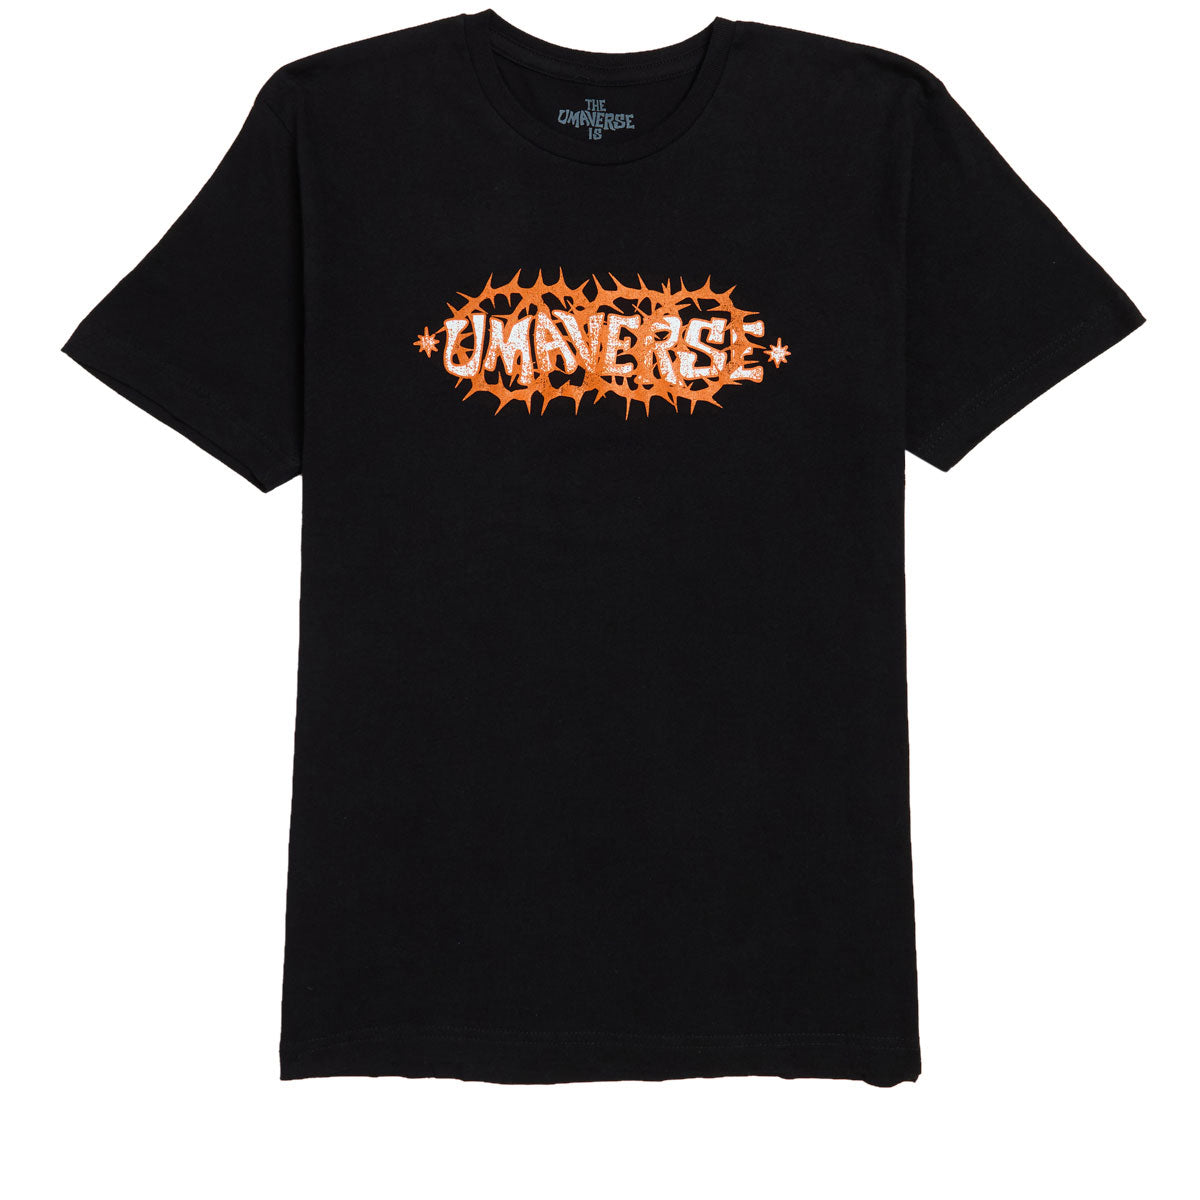 Umaverse Thorns T-Shirt - Black image 1